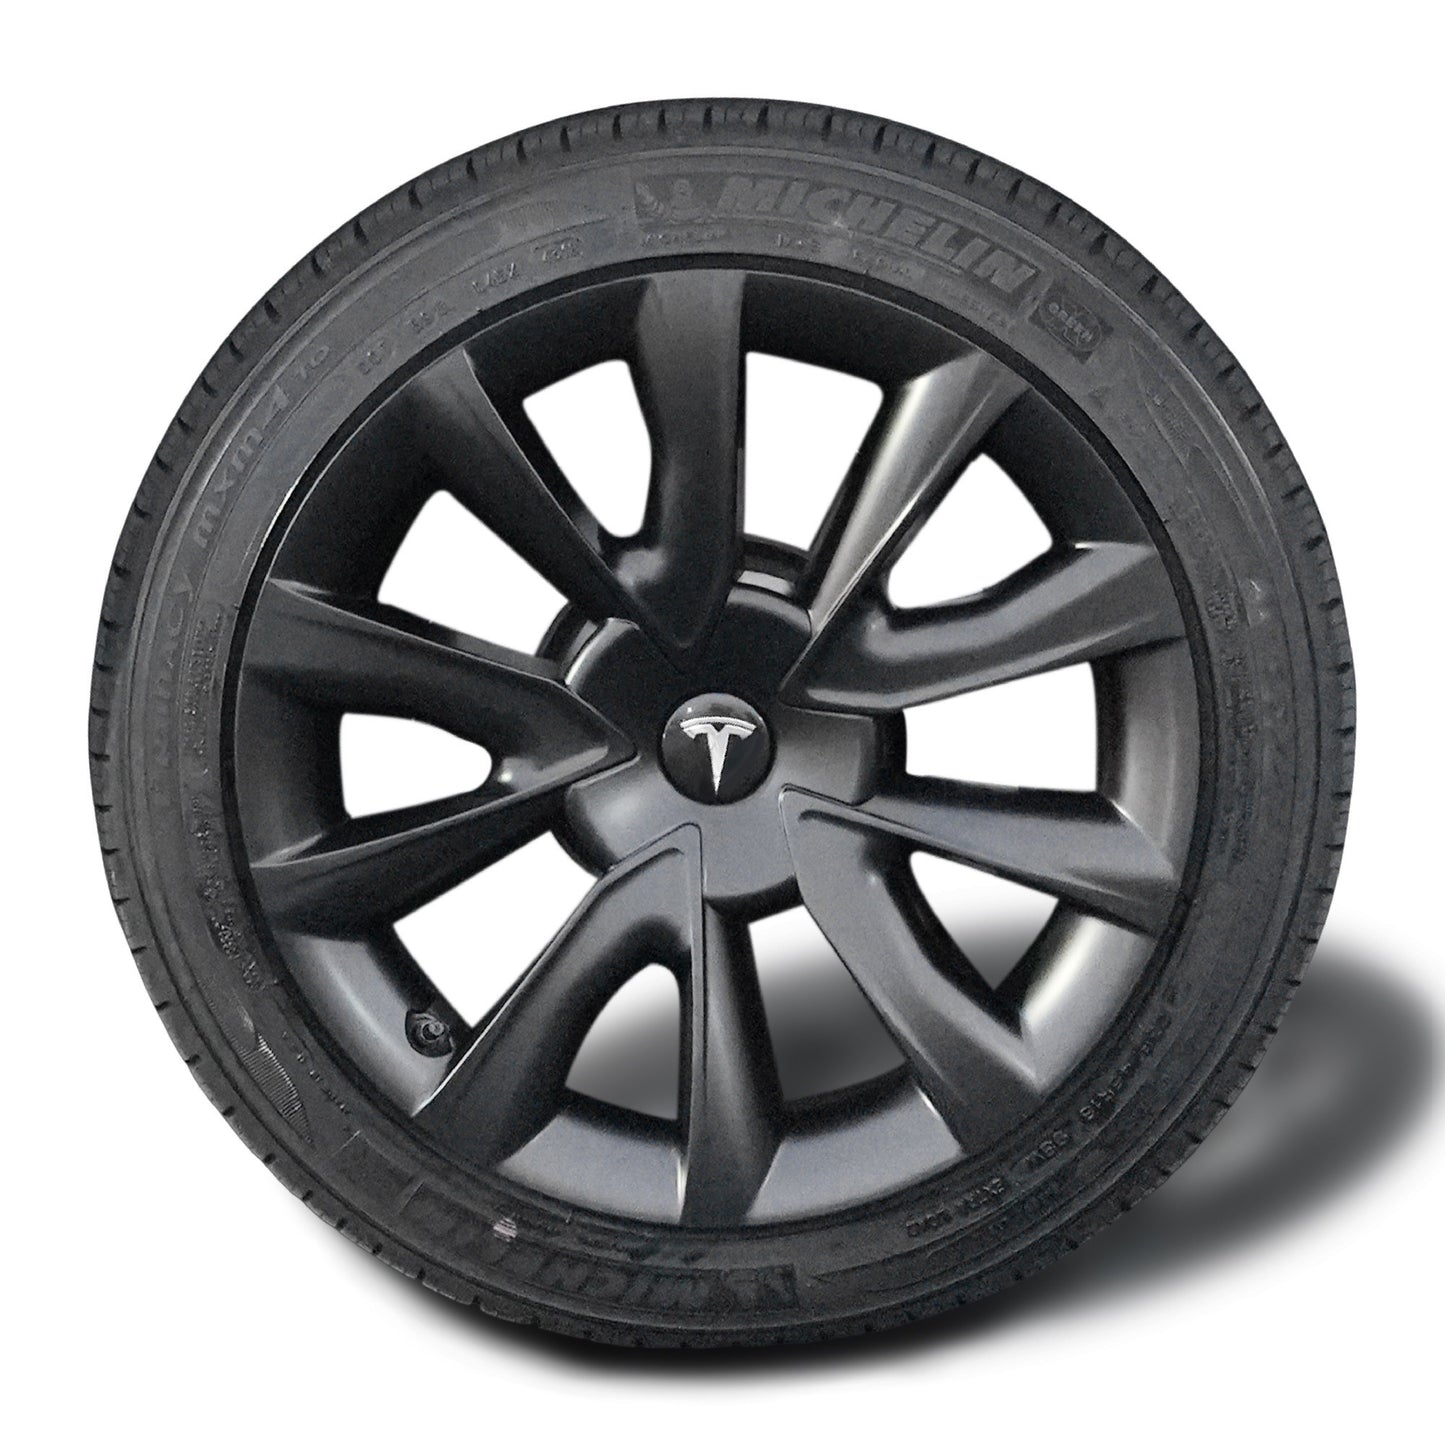 FREE U.S. SHIPPING - Sport Aero Wheel - Designed for Tesla Model 3 18" Rim